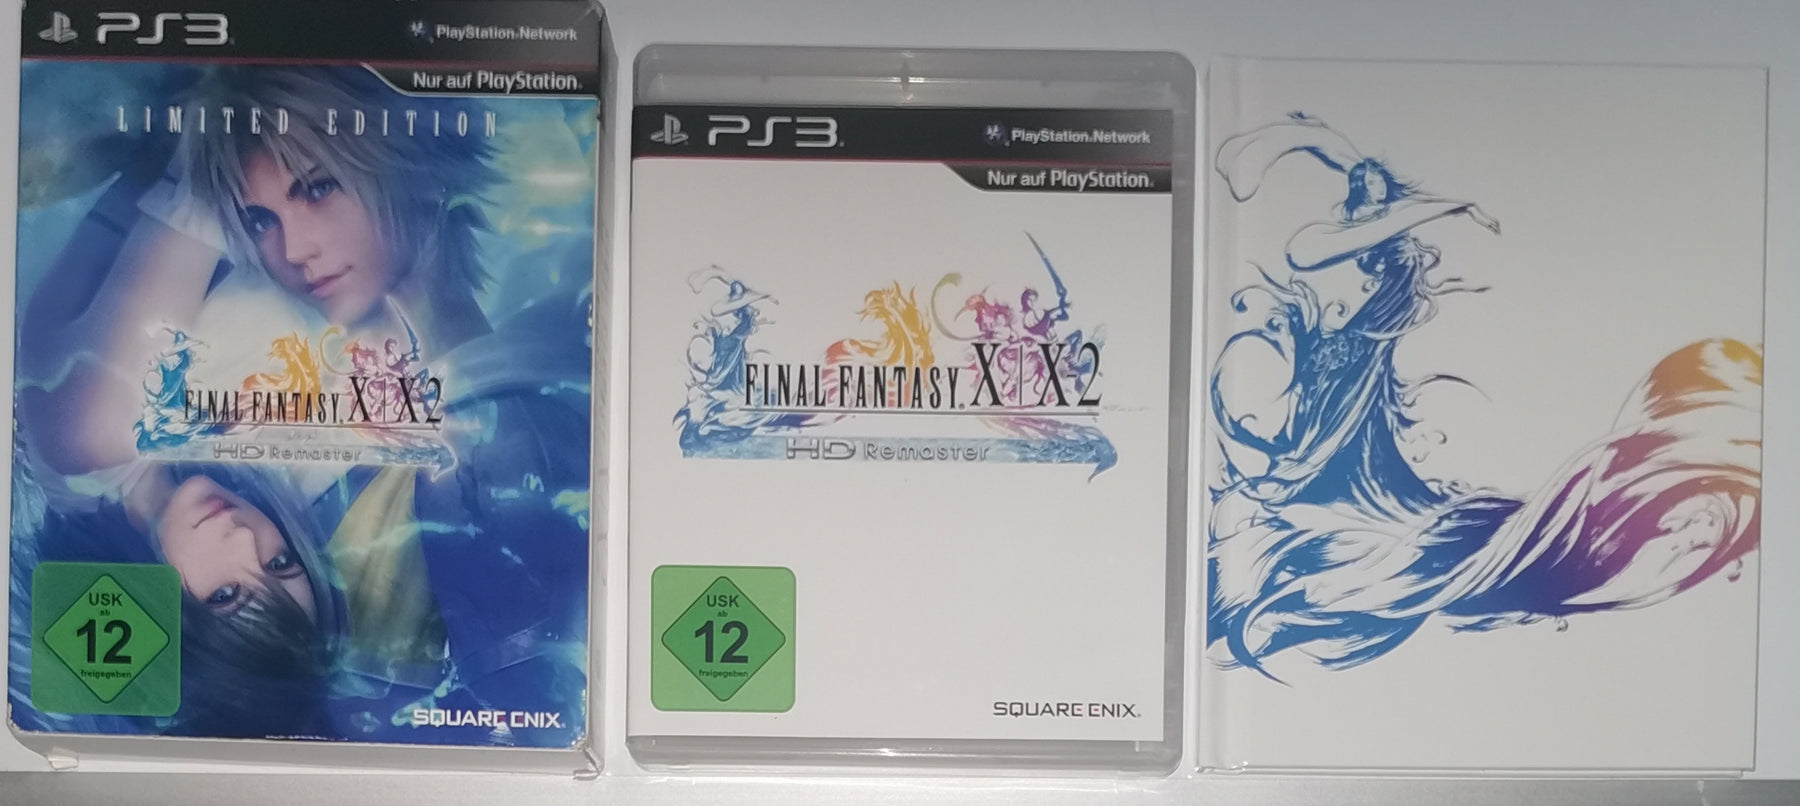 Final Fantasy XX 2 Hd Remaster Limited Edition Playstation 3 [Gut]